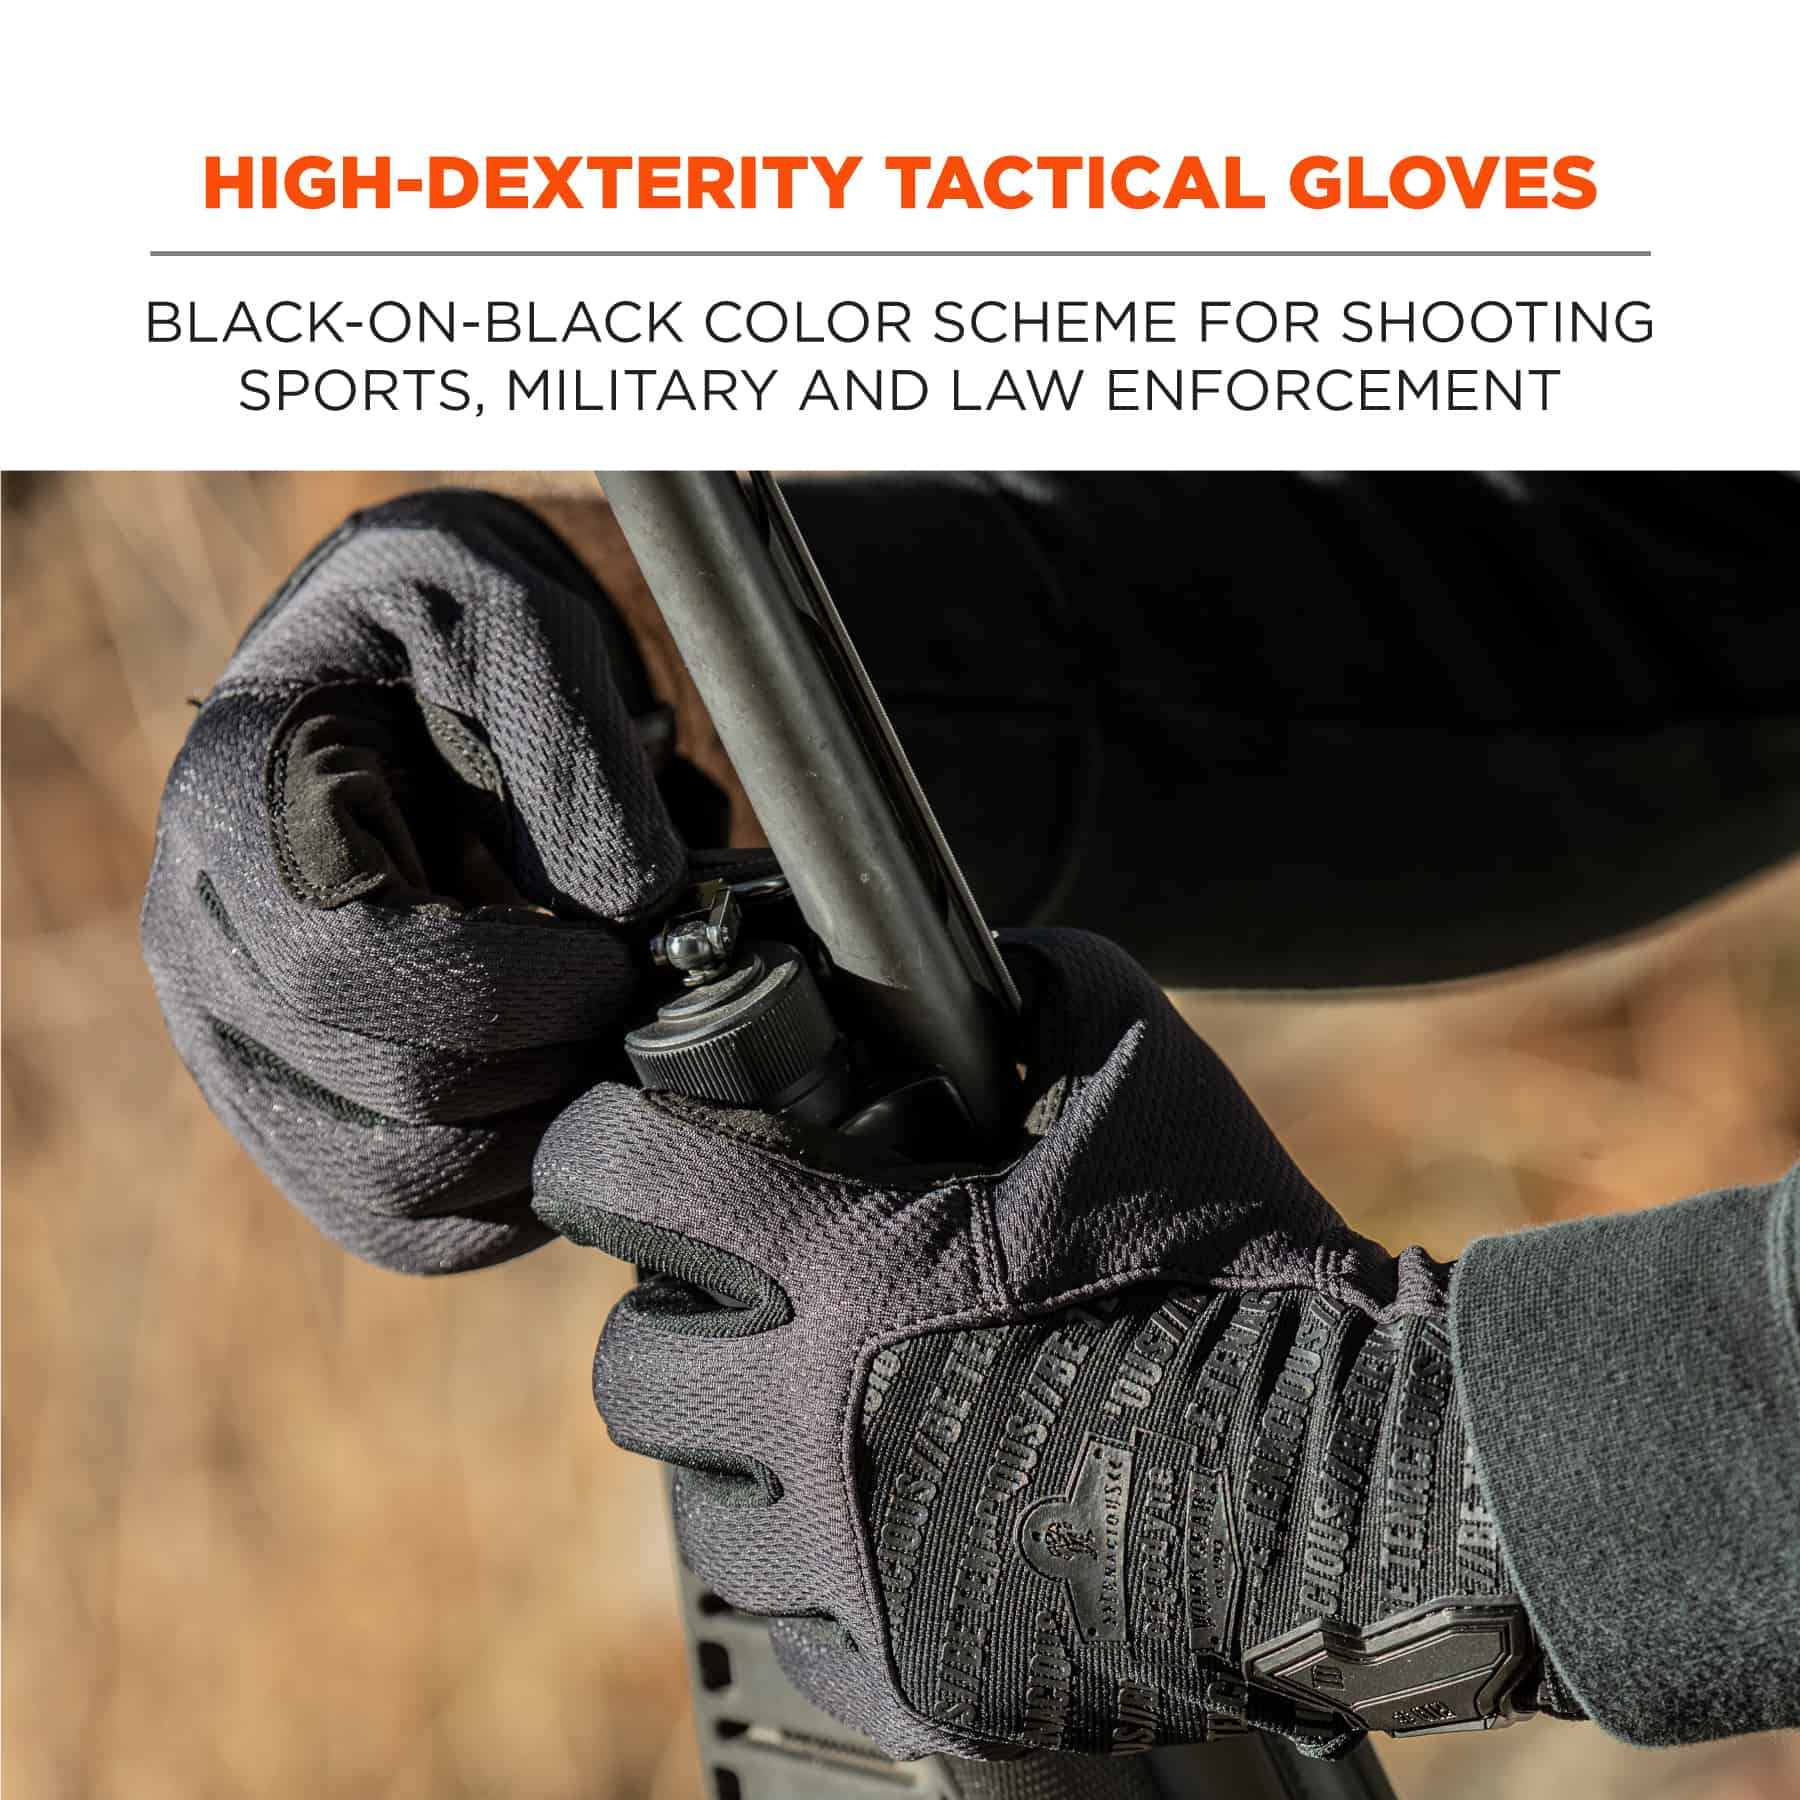 https://www.ergodyne.com/sites/default/files/product-images/17576-812blk-high-dexterity-black-tactical-gloves-high-dexterity-tactical-gloves.jpg